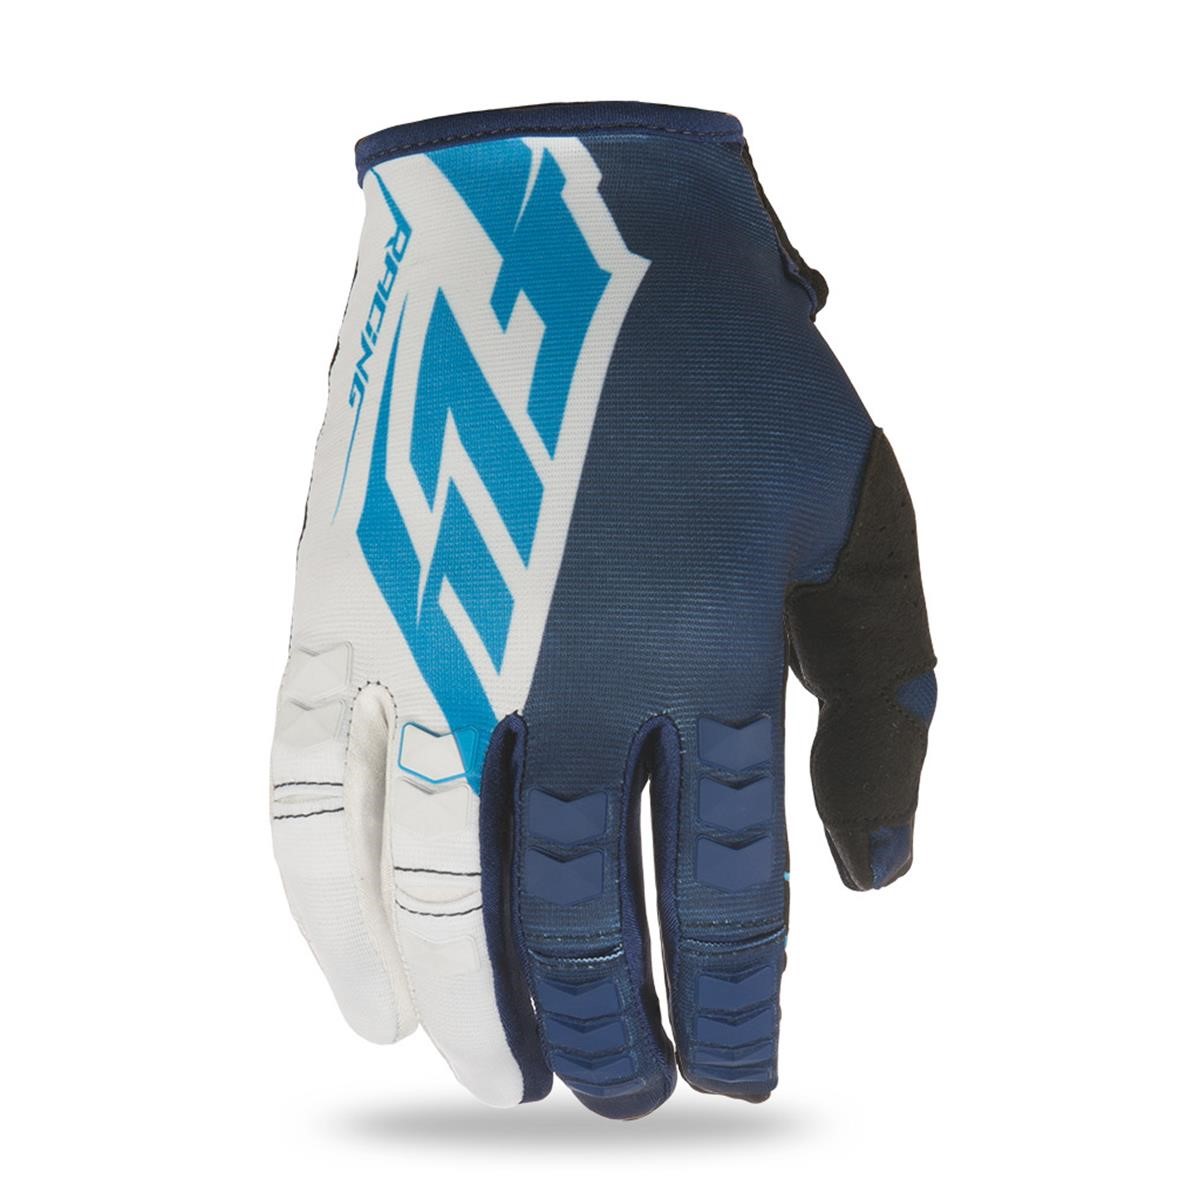 Fly Racing Handschuhe Kinetic Blau/Weiß/Navy